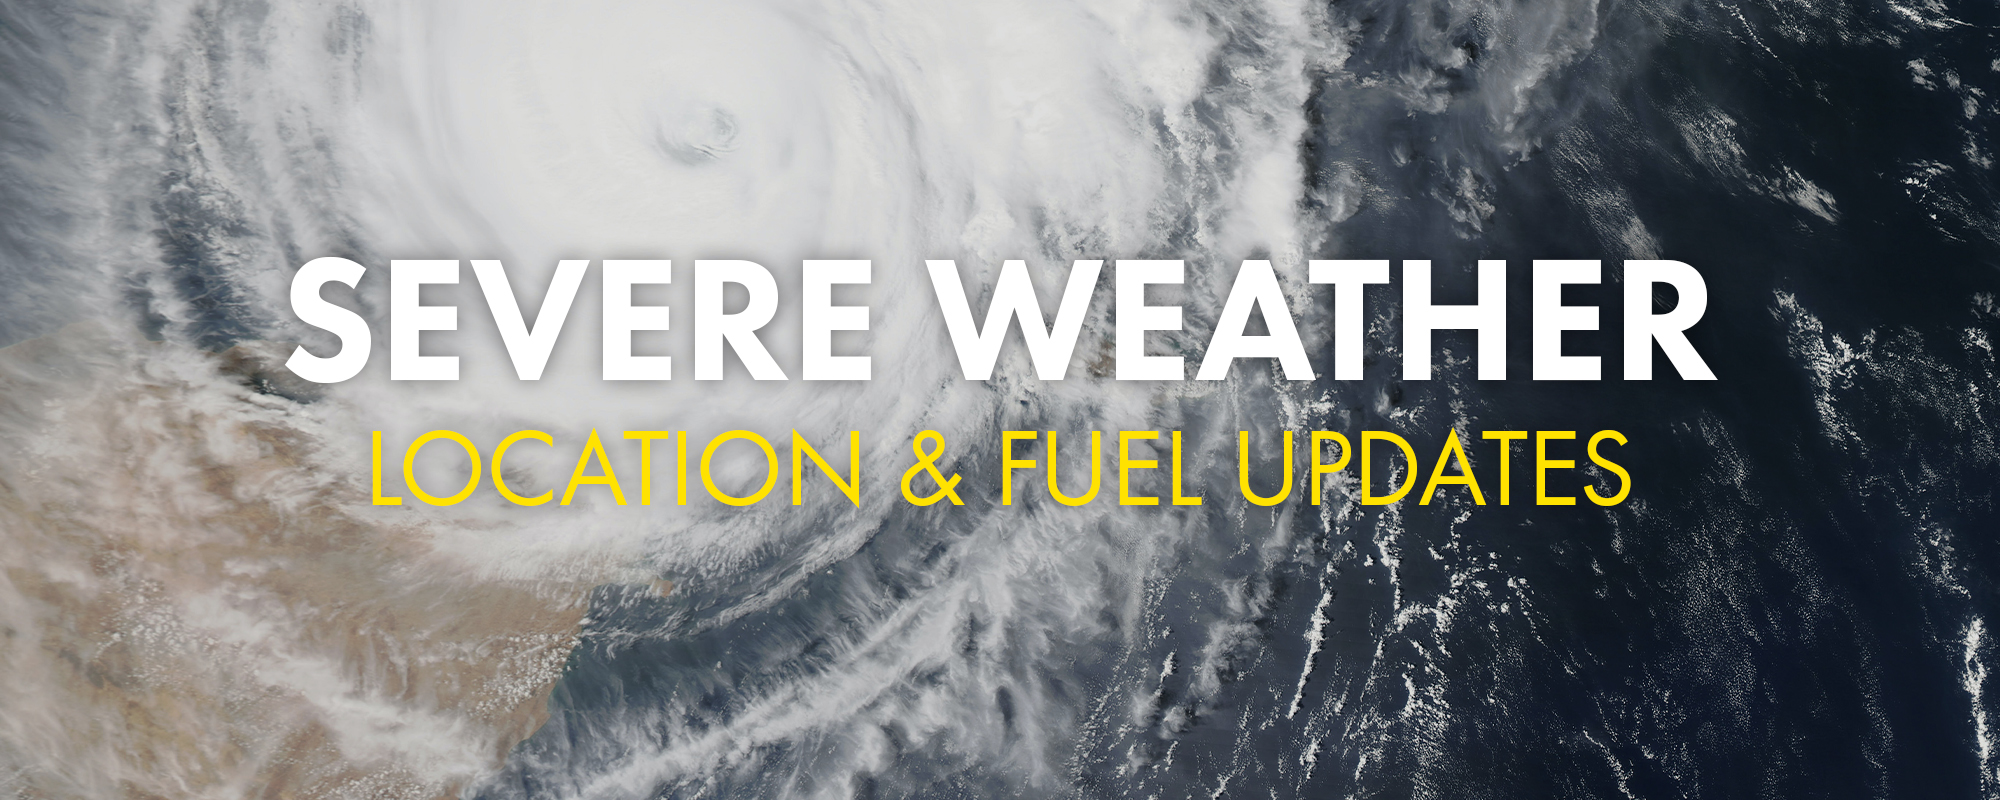 Severe weather location & fuel updates graphics